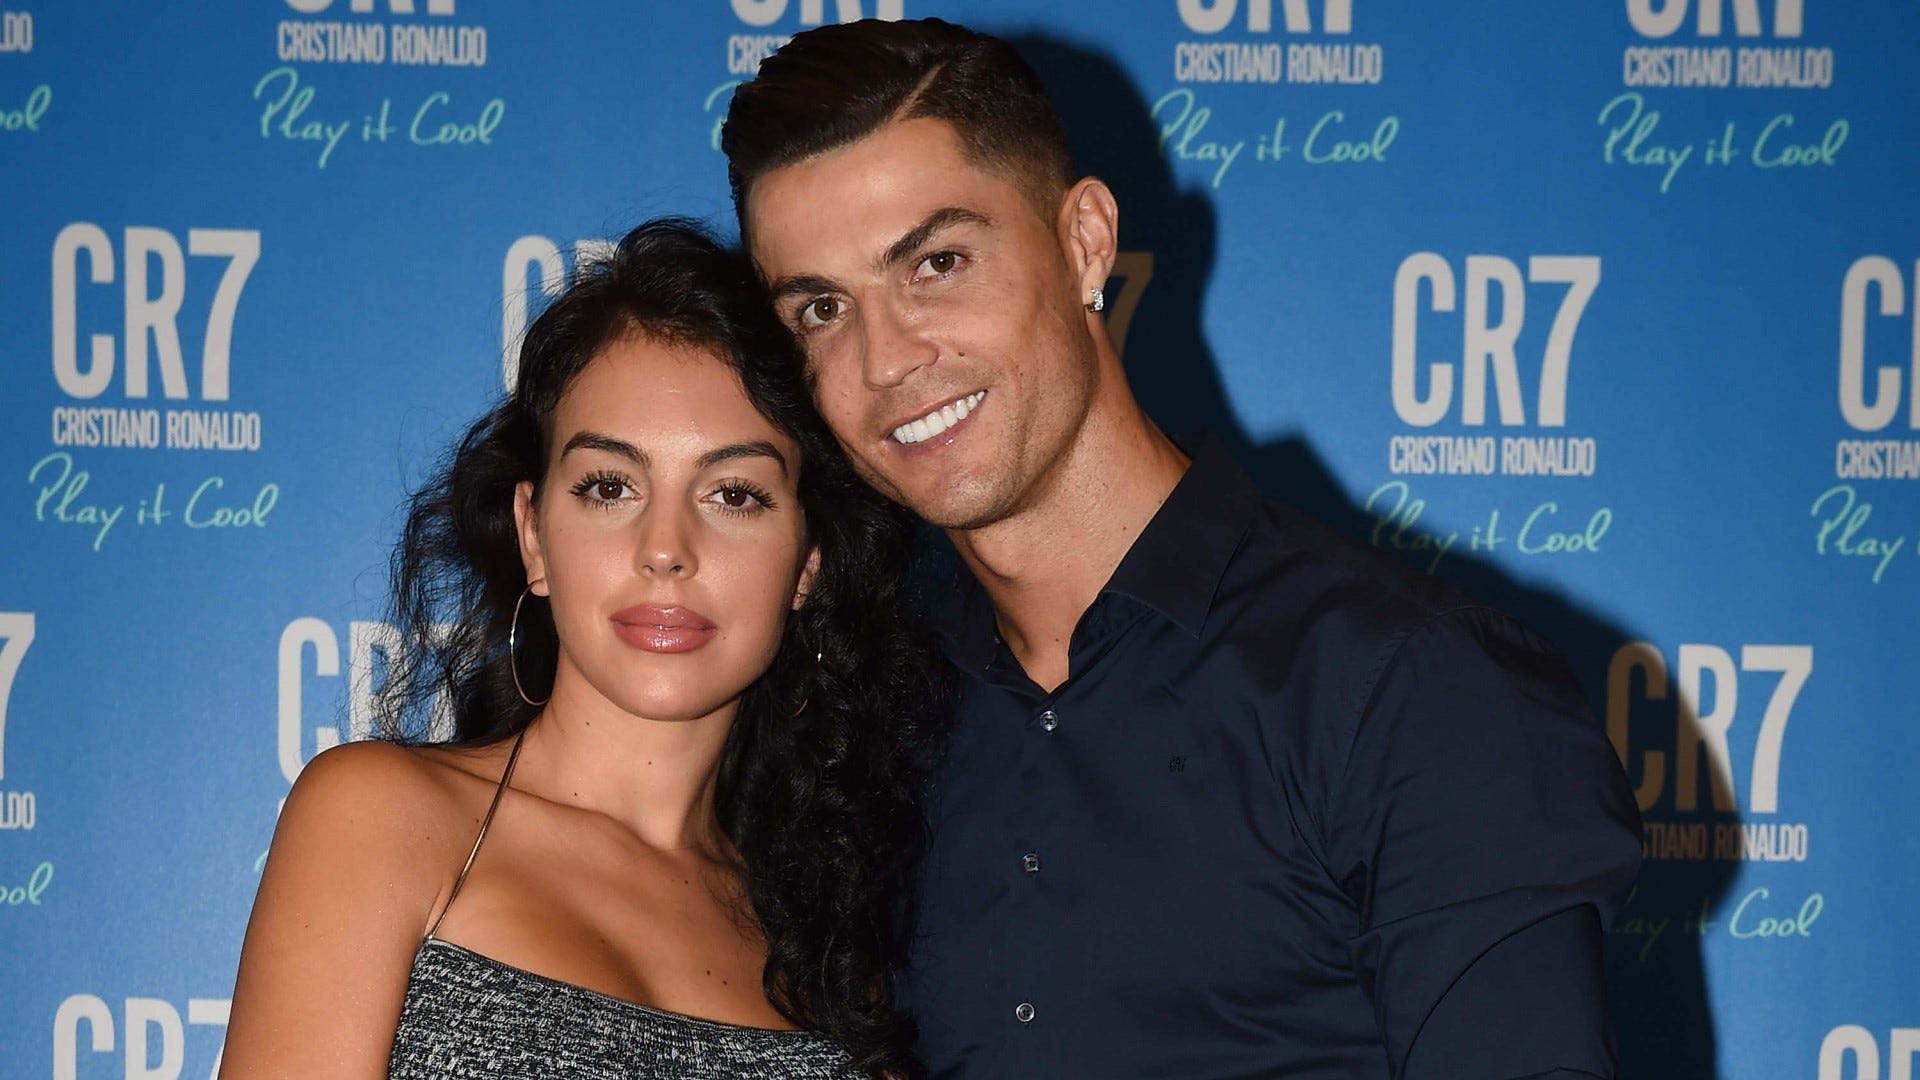 Cheers to love' - Cristiano Ronaldo posts romantic photo with partner  Georgina Rodriguez amid rumours their relationship is under strain |  Goal.com United Arab Emirates